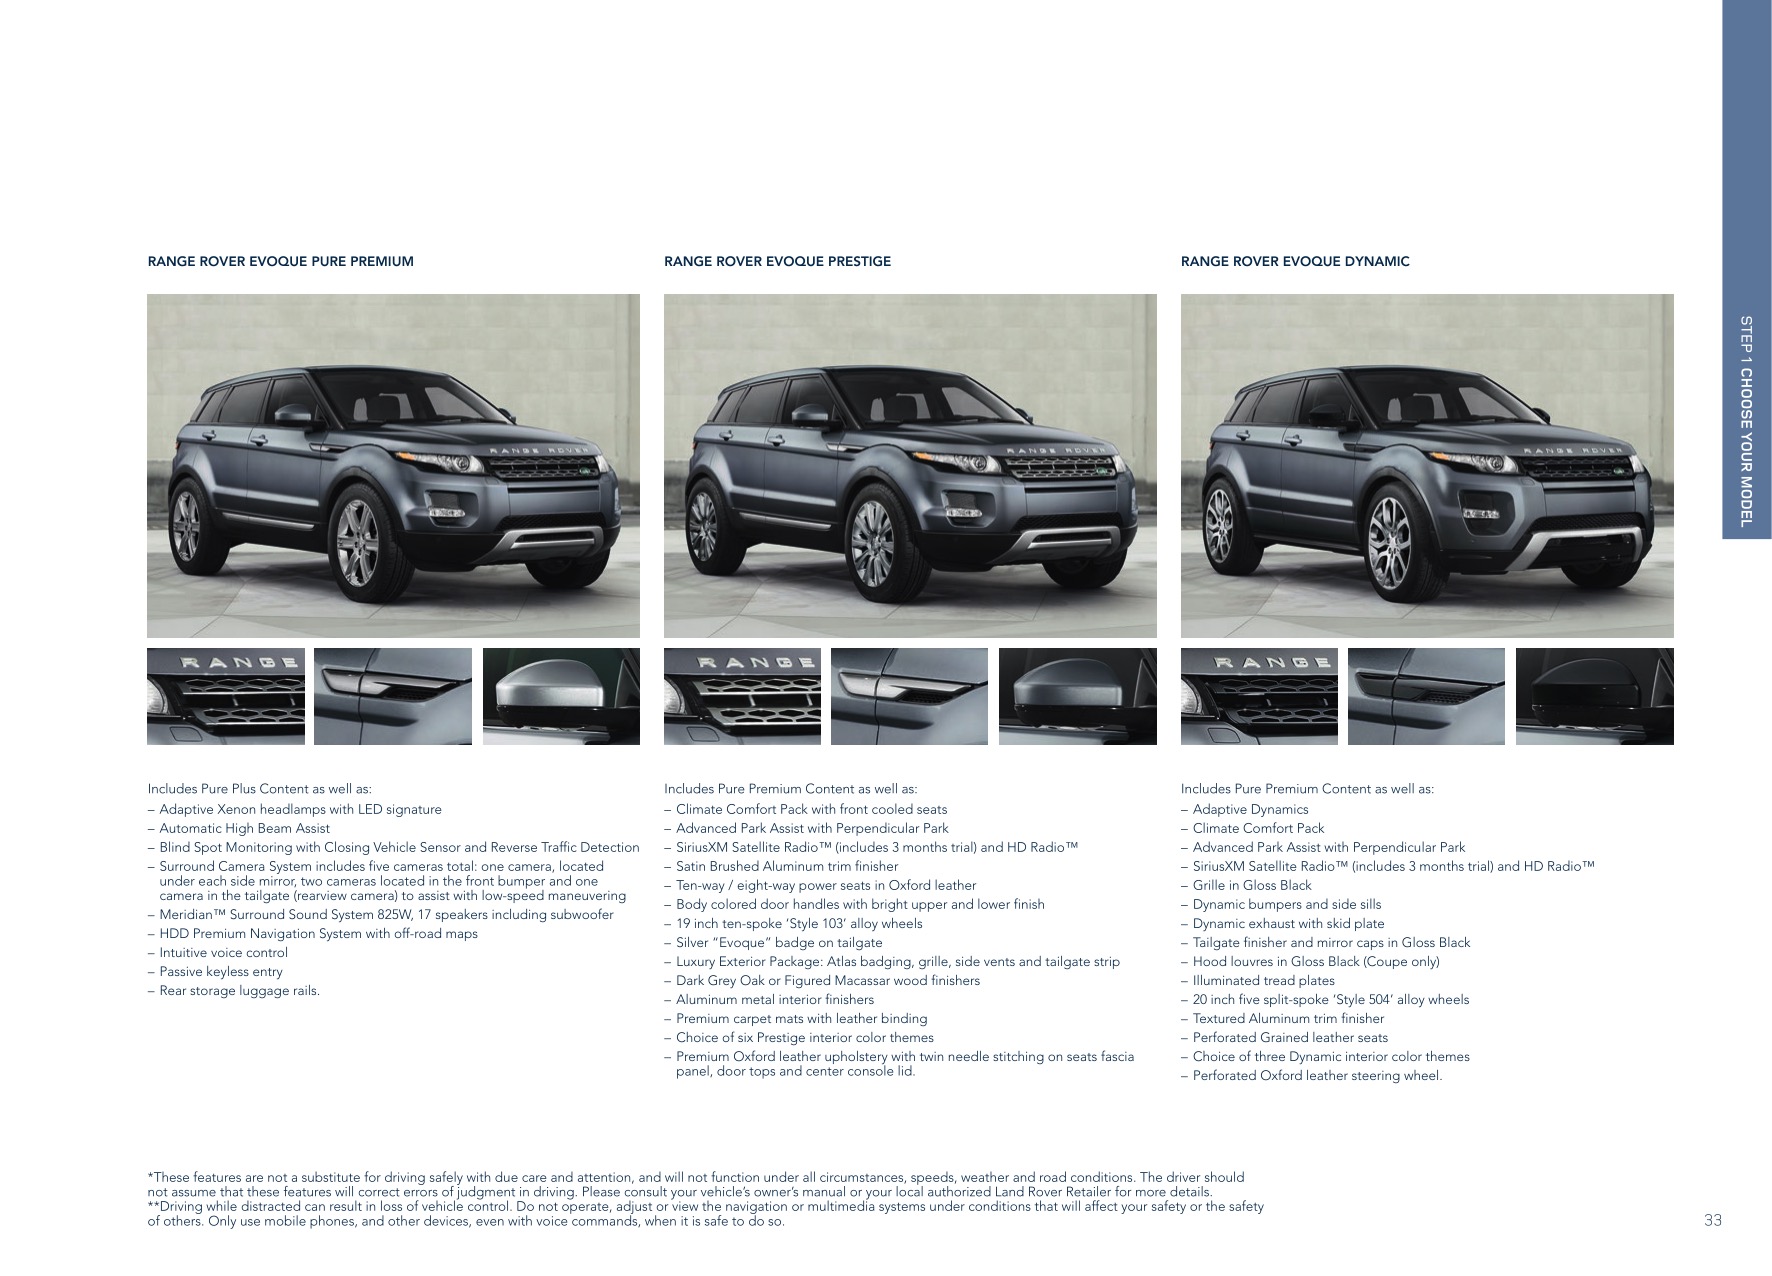 2015 Land Rover Evoque Brochure Page 15